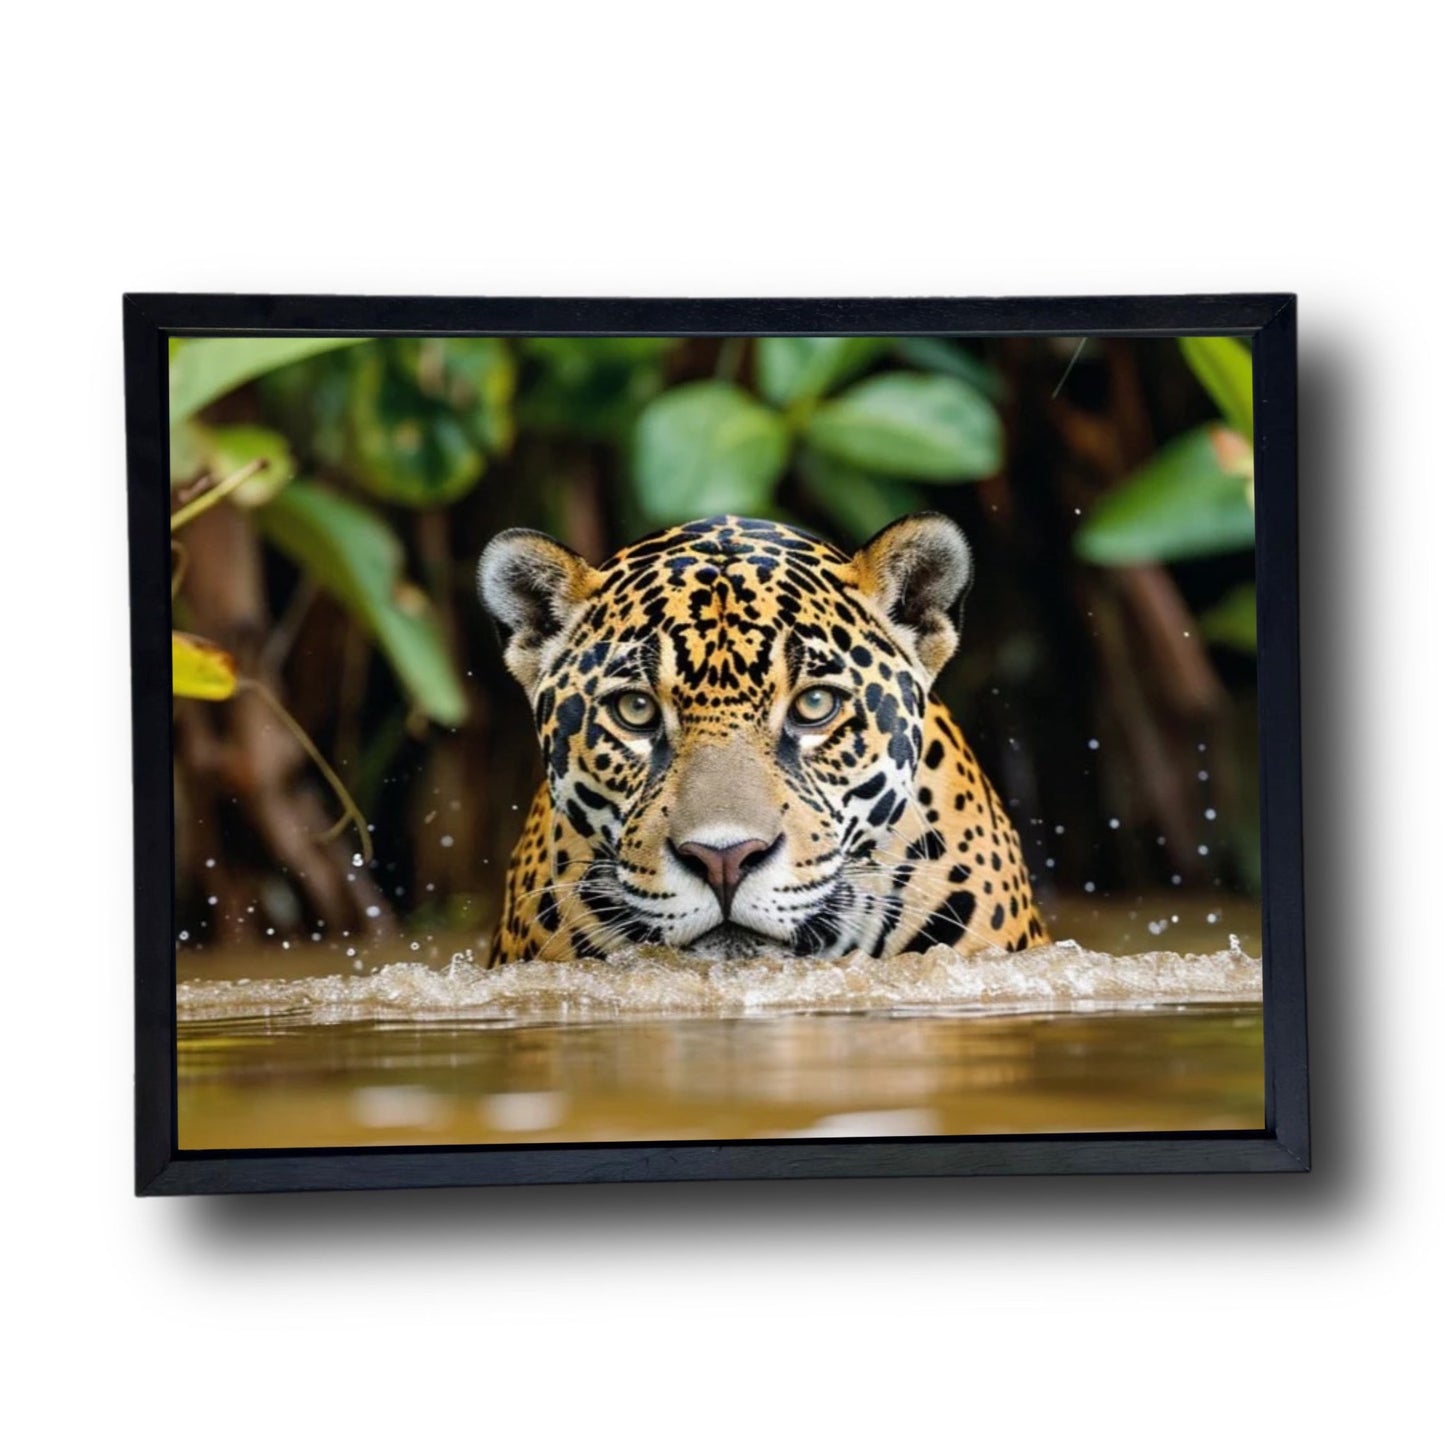 Jaguar Emerging Amazon River 2.0